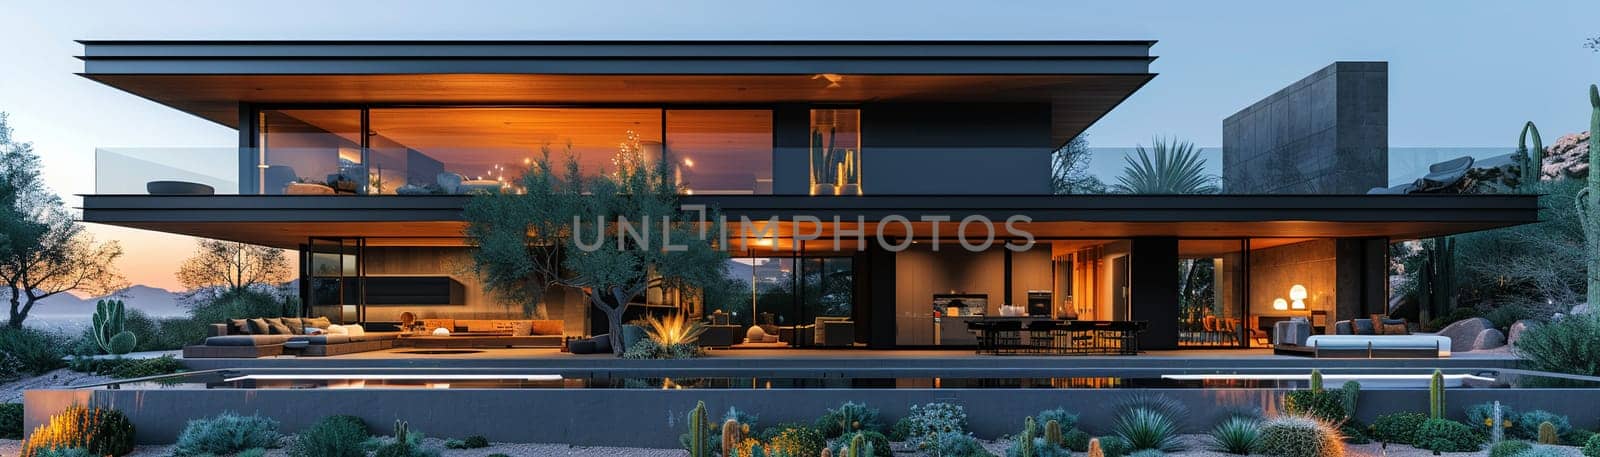 Contemporary Desert Home with Sustainable Landscaping, embodying modern desert modernism.